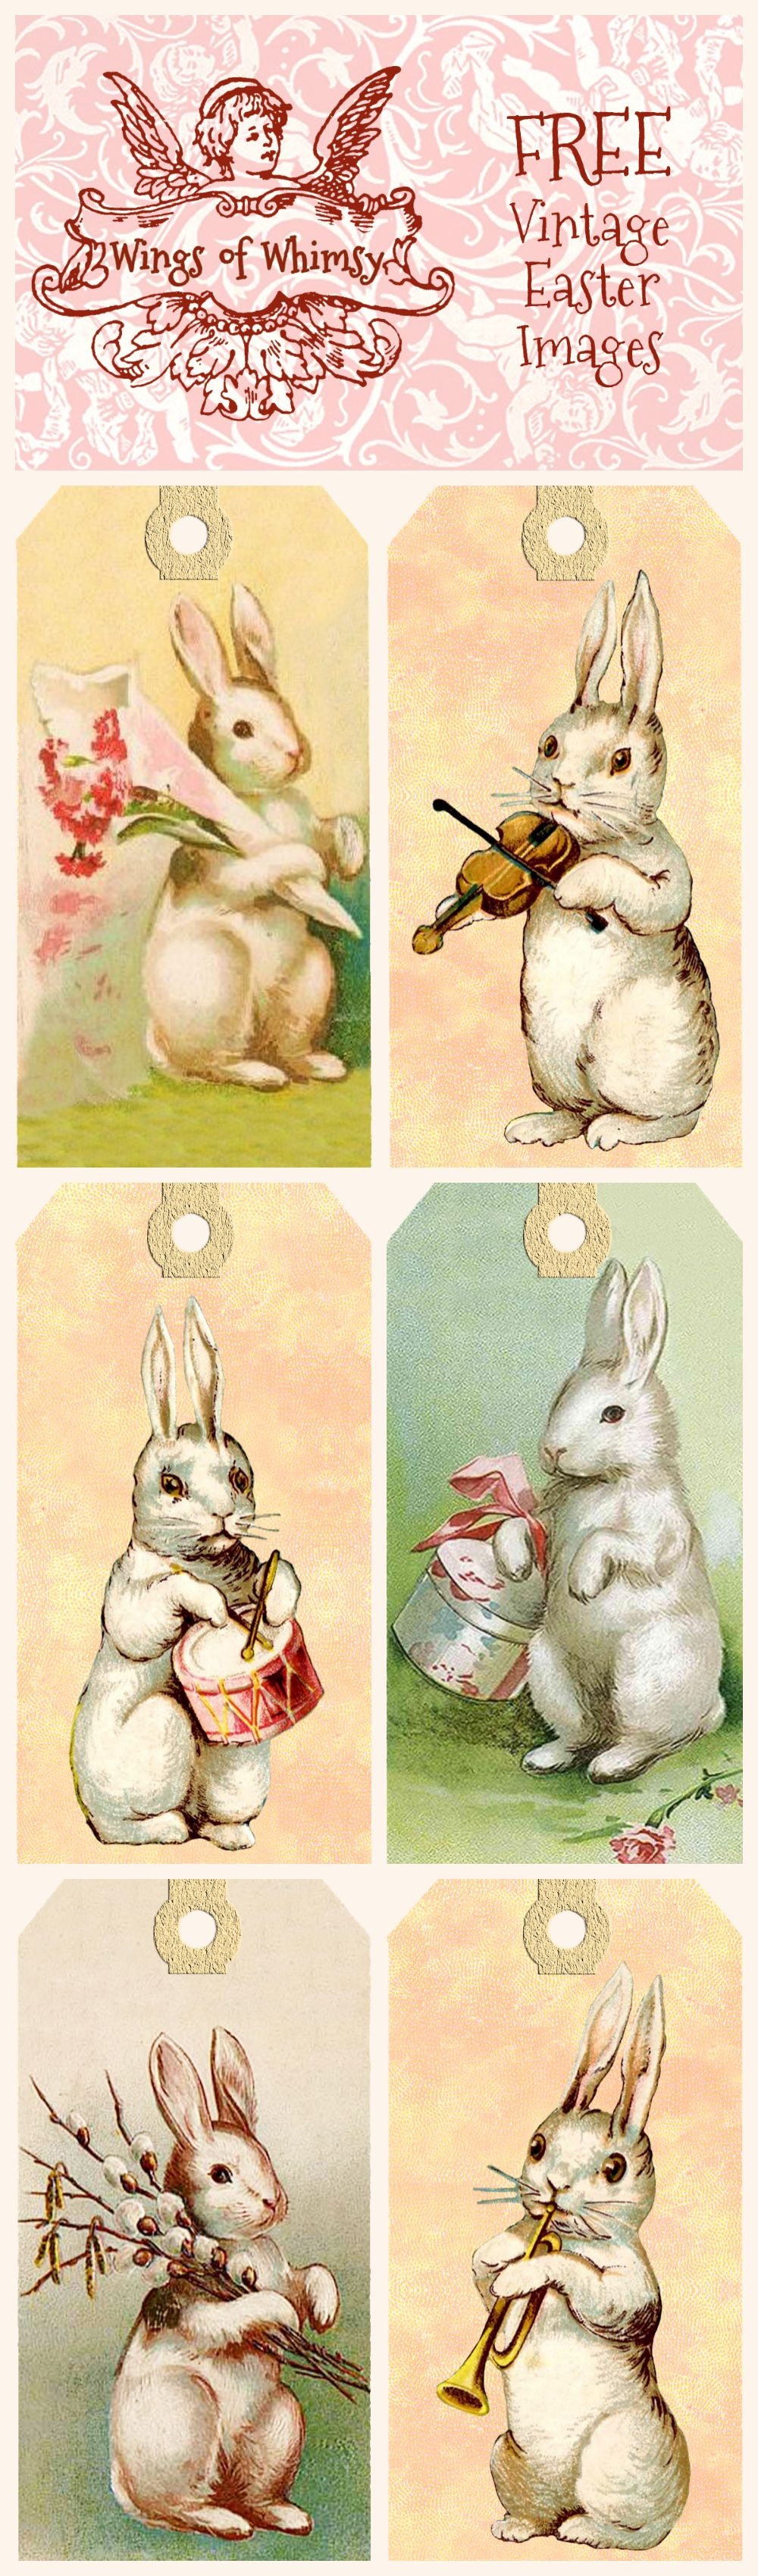 Vintage Easter Bunny Tags – Free Printables | Easter | Easter Crafts - Free Printable Vintage Easter Images